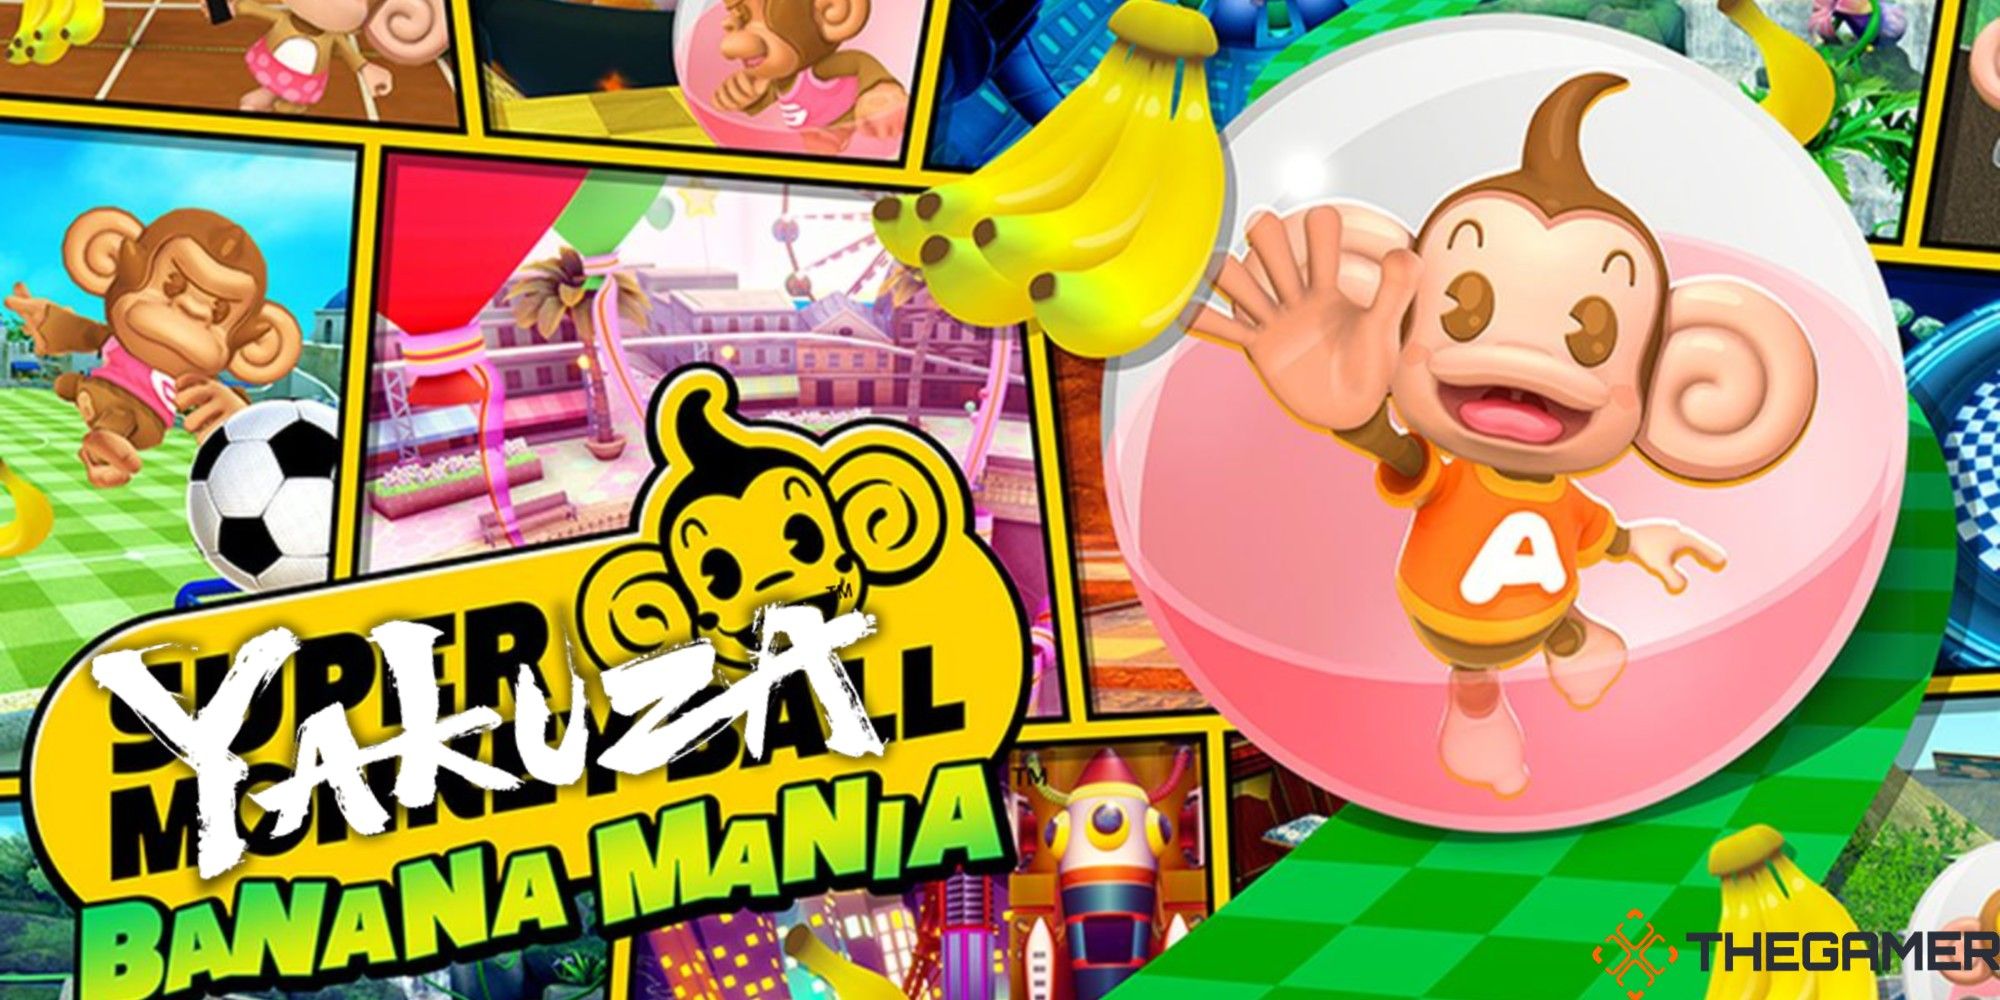 super monkey ball banana mania logo